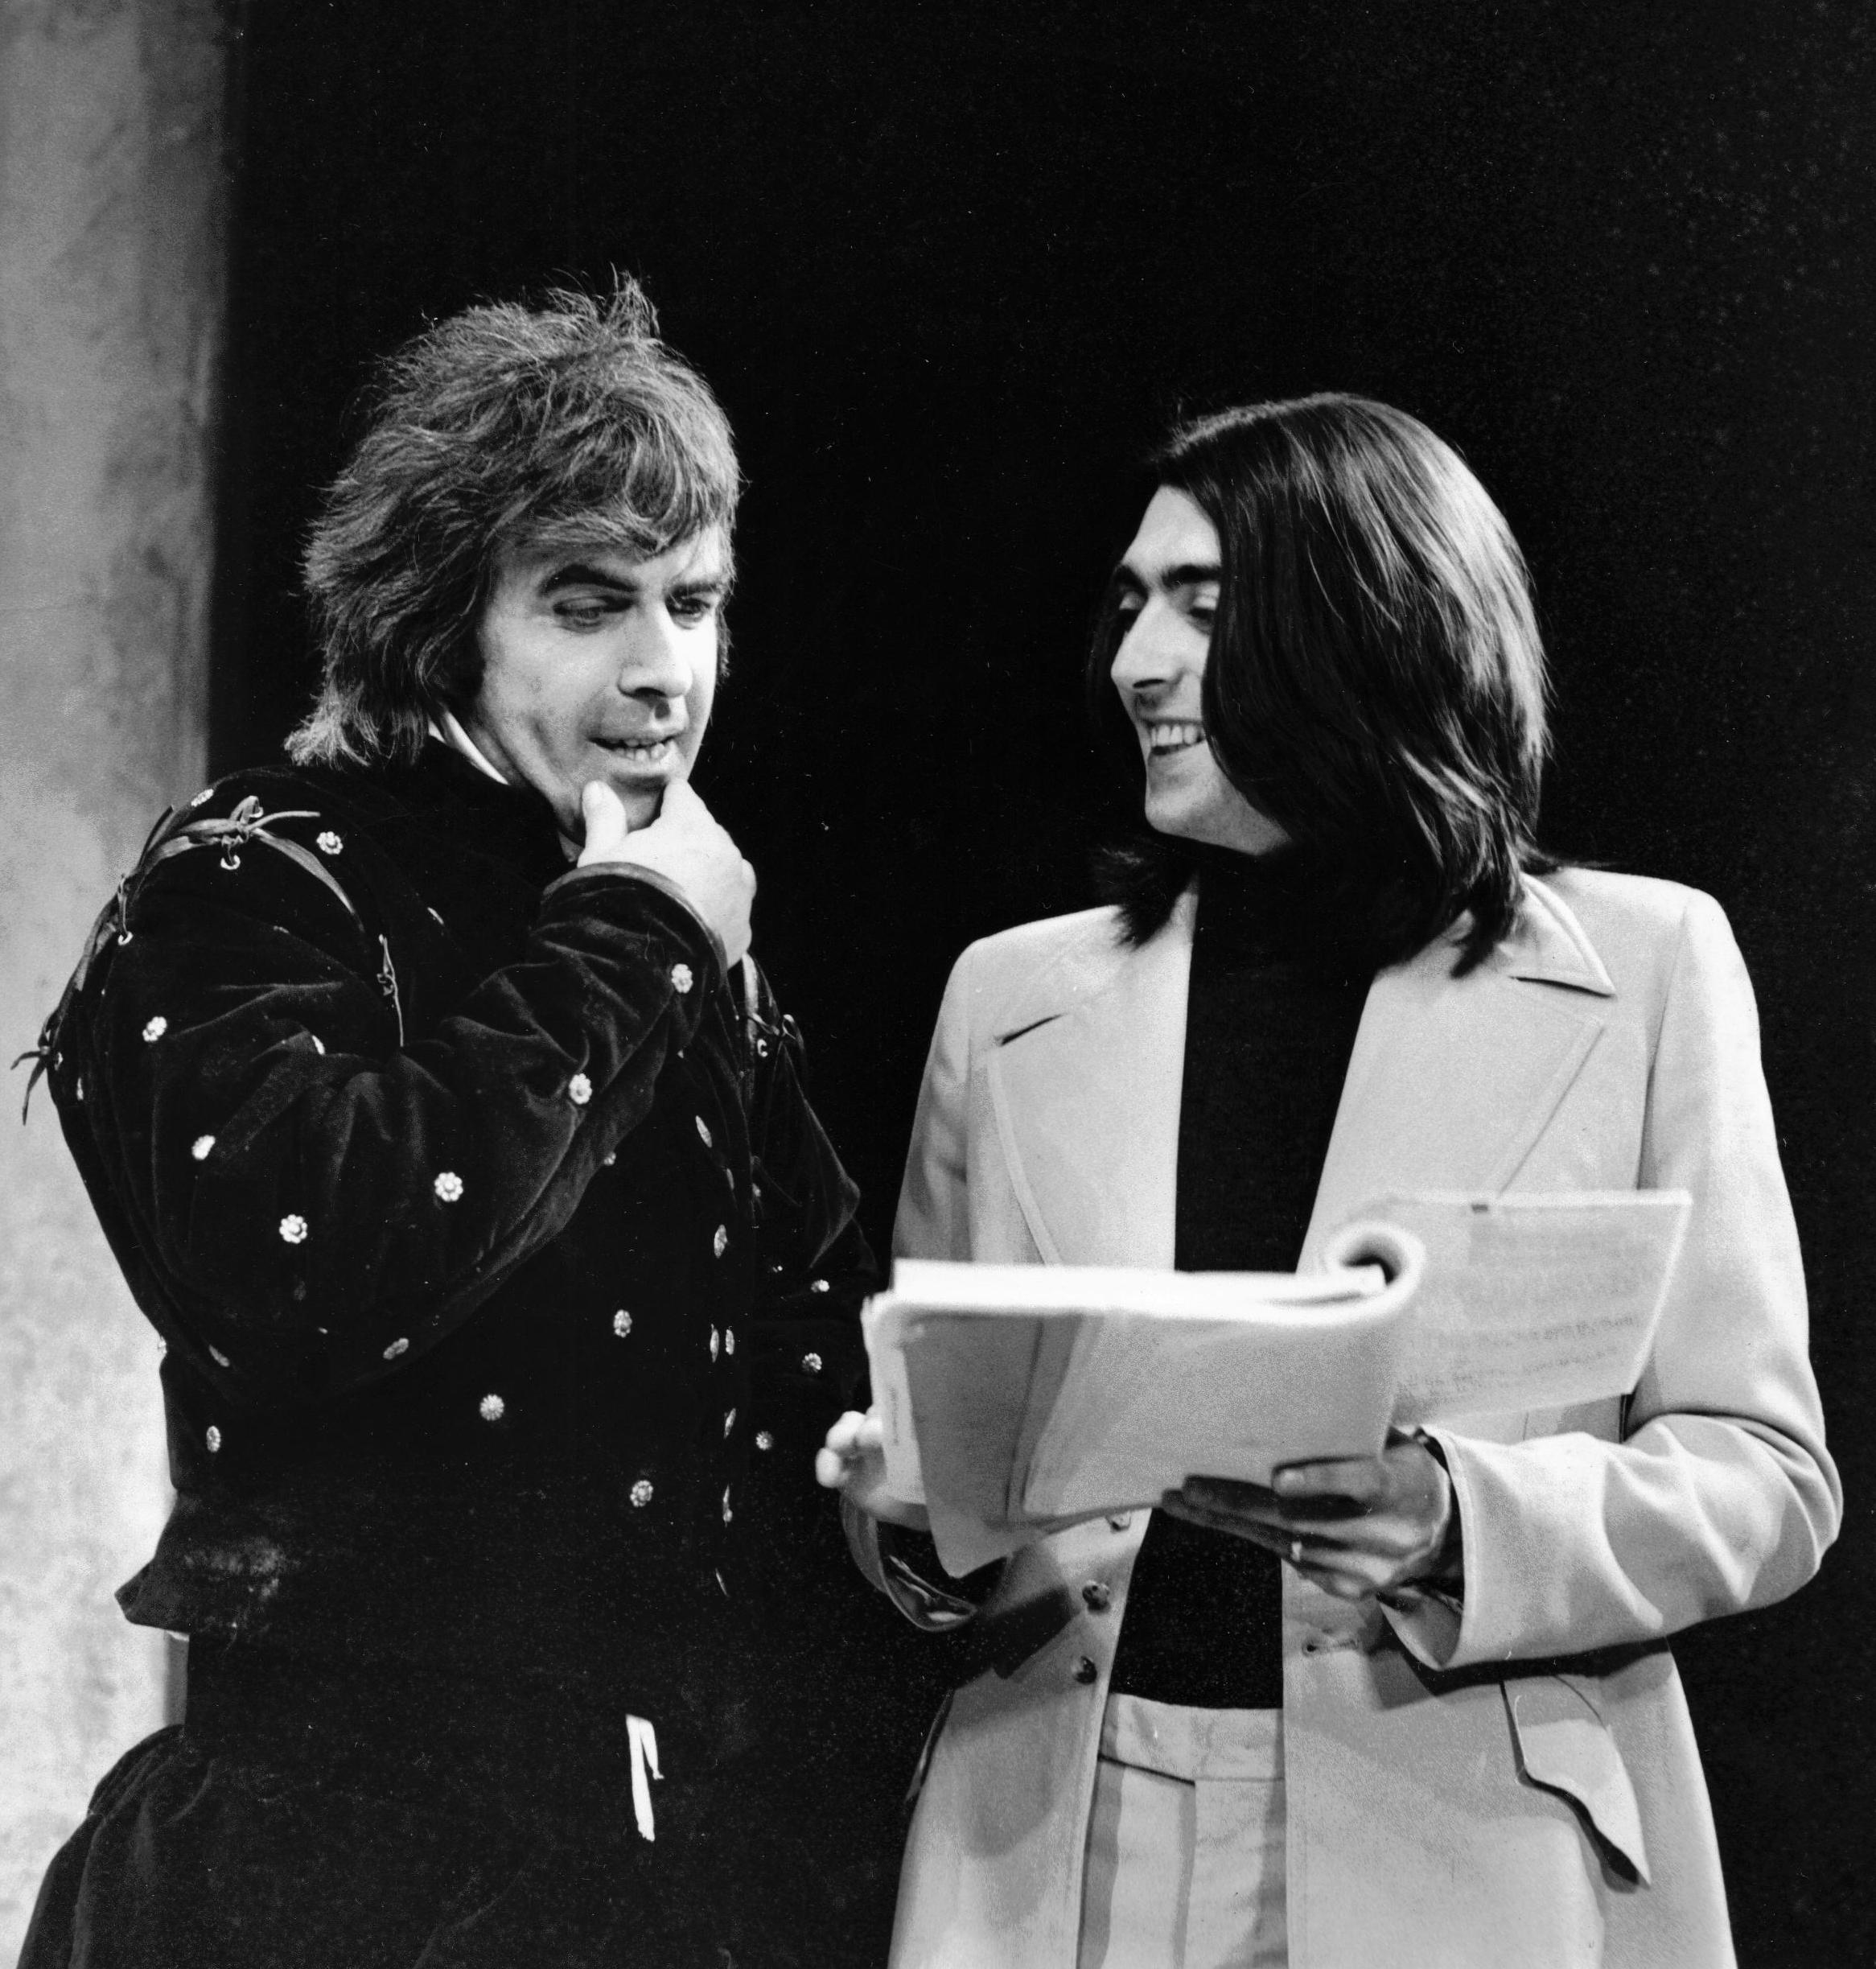 31_John Cairney in rehearsal with Director, Bill Bryden in 'The Burning' Lyceum Theatre, Edinburgh 1976.jpg